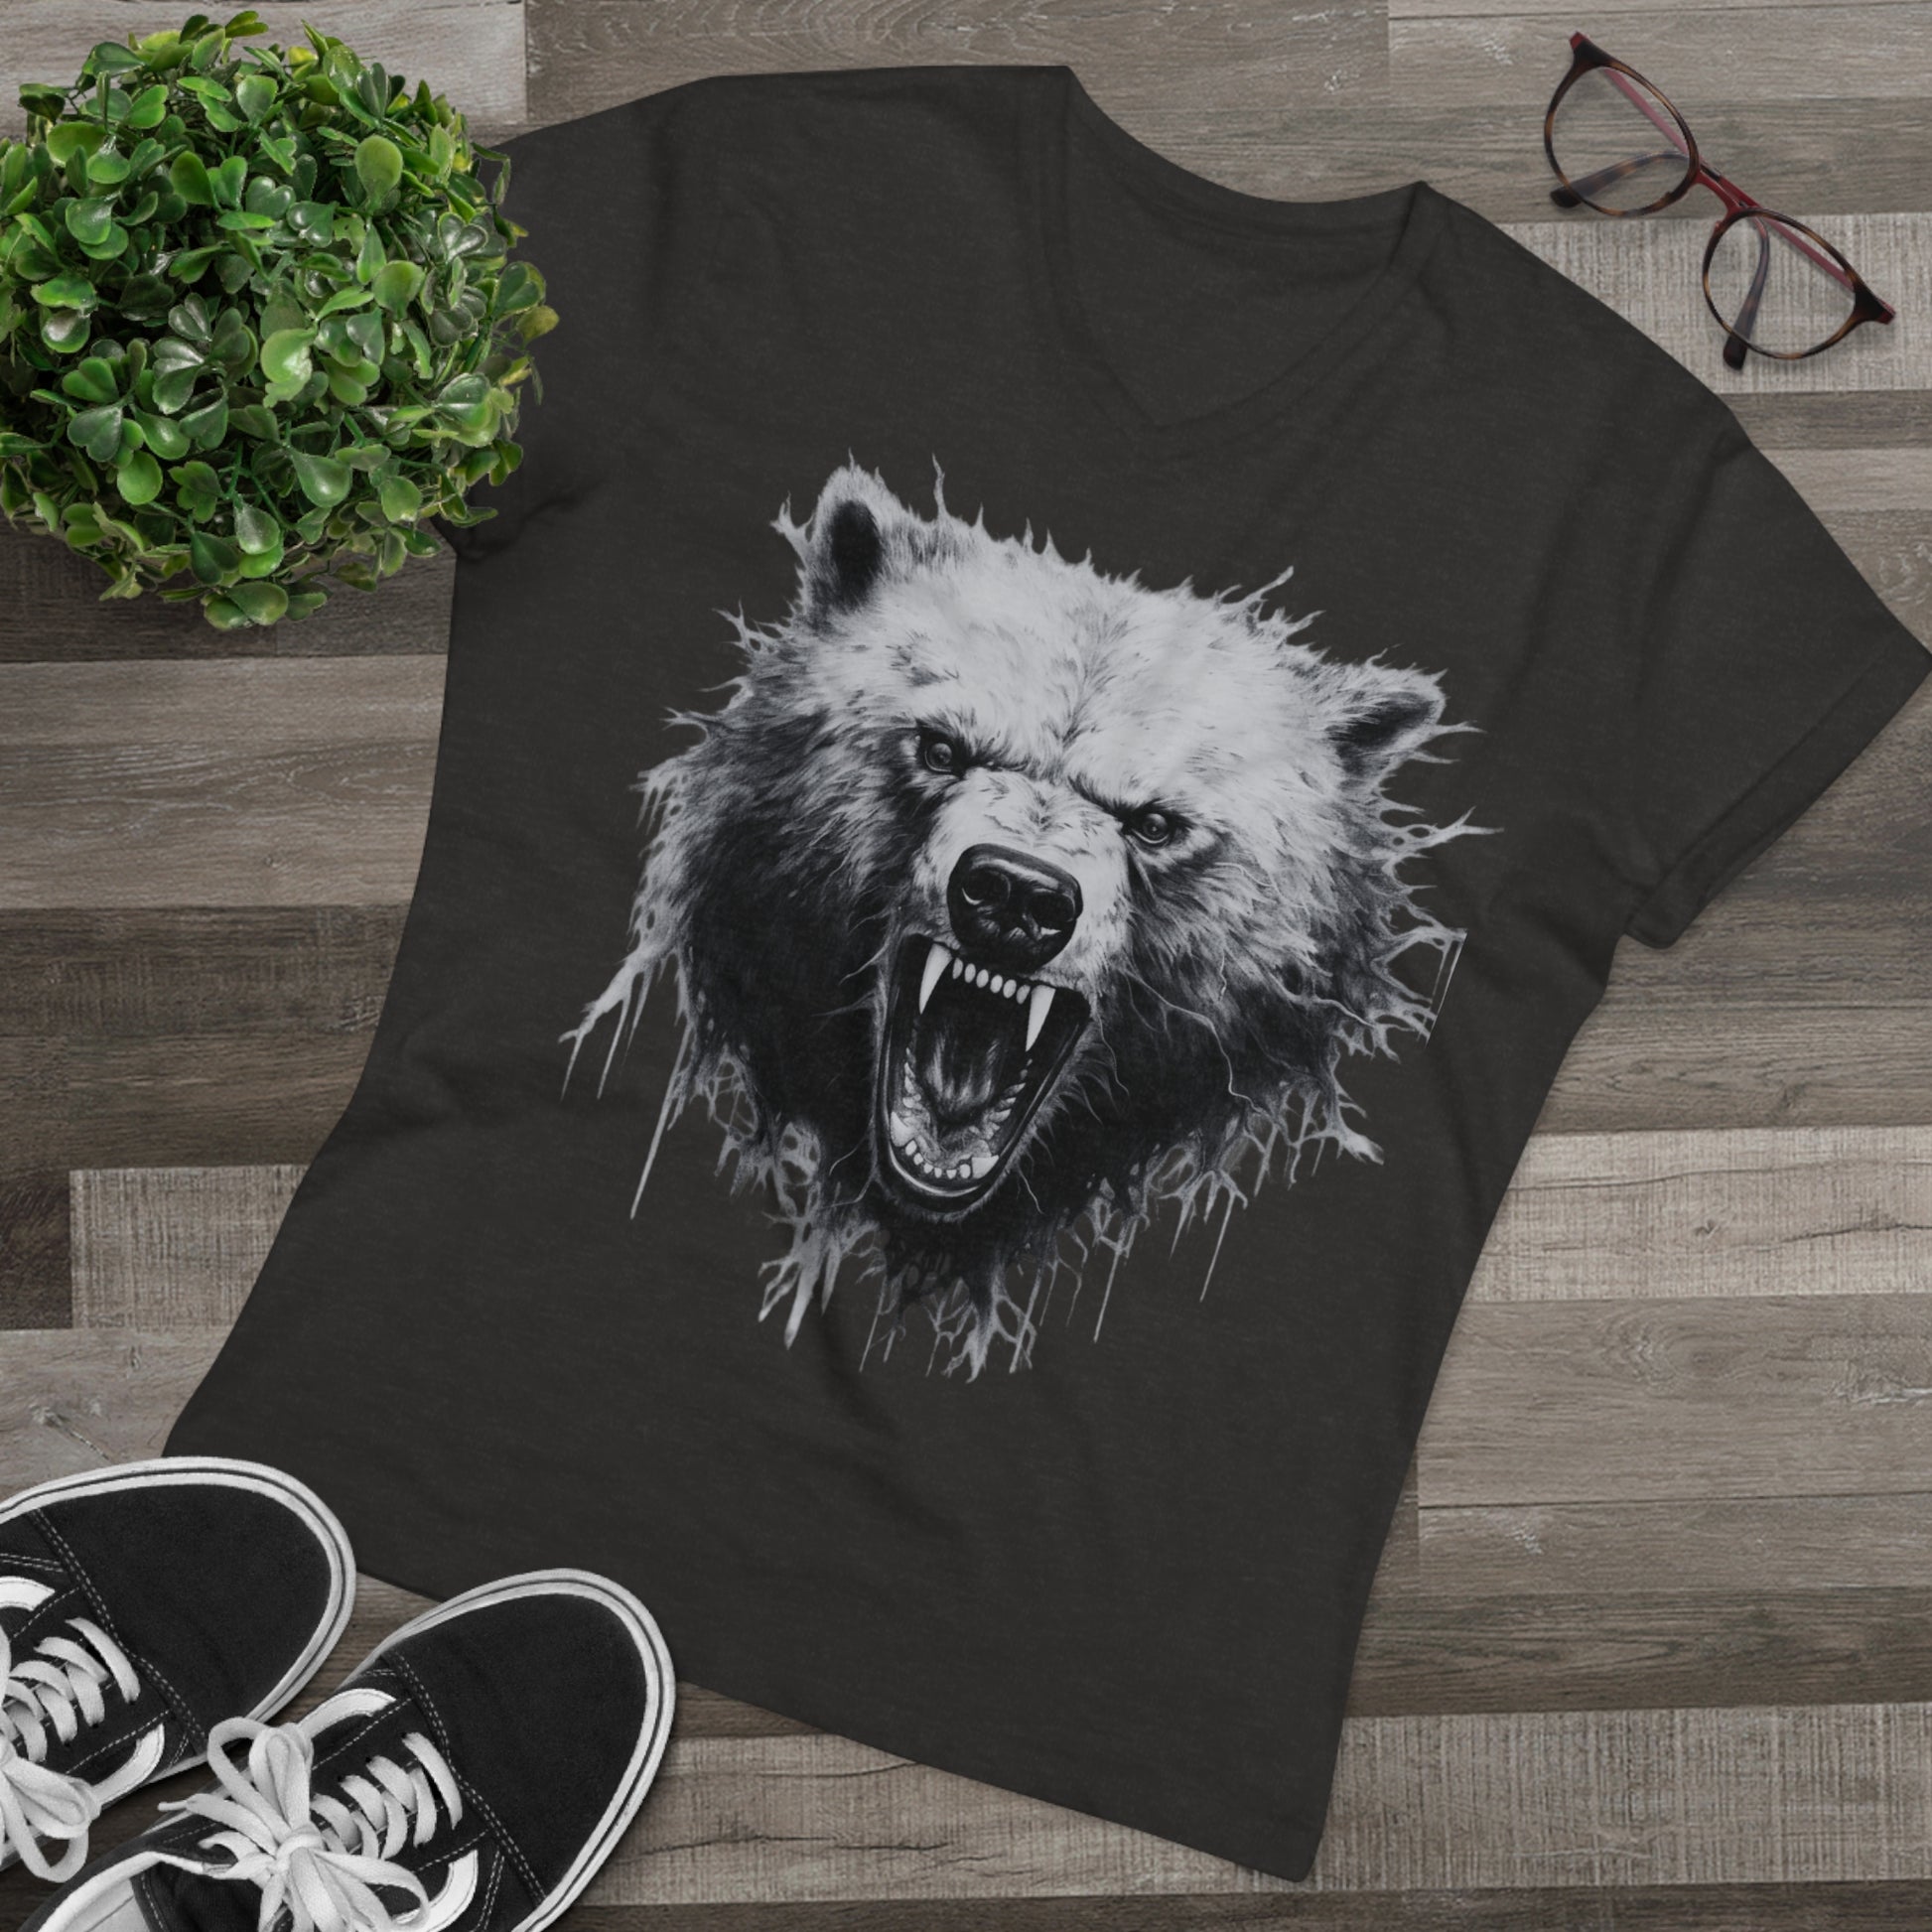 Angry Bear Close Up Men's Organic V-Neck T-Shirt | Fierce Wildlife Shirt | Nature Inspired Tee V-neck Dark Heather Grey S 